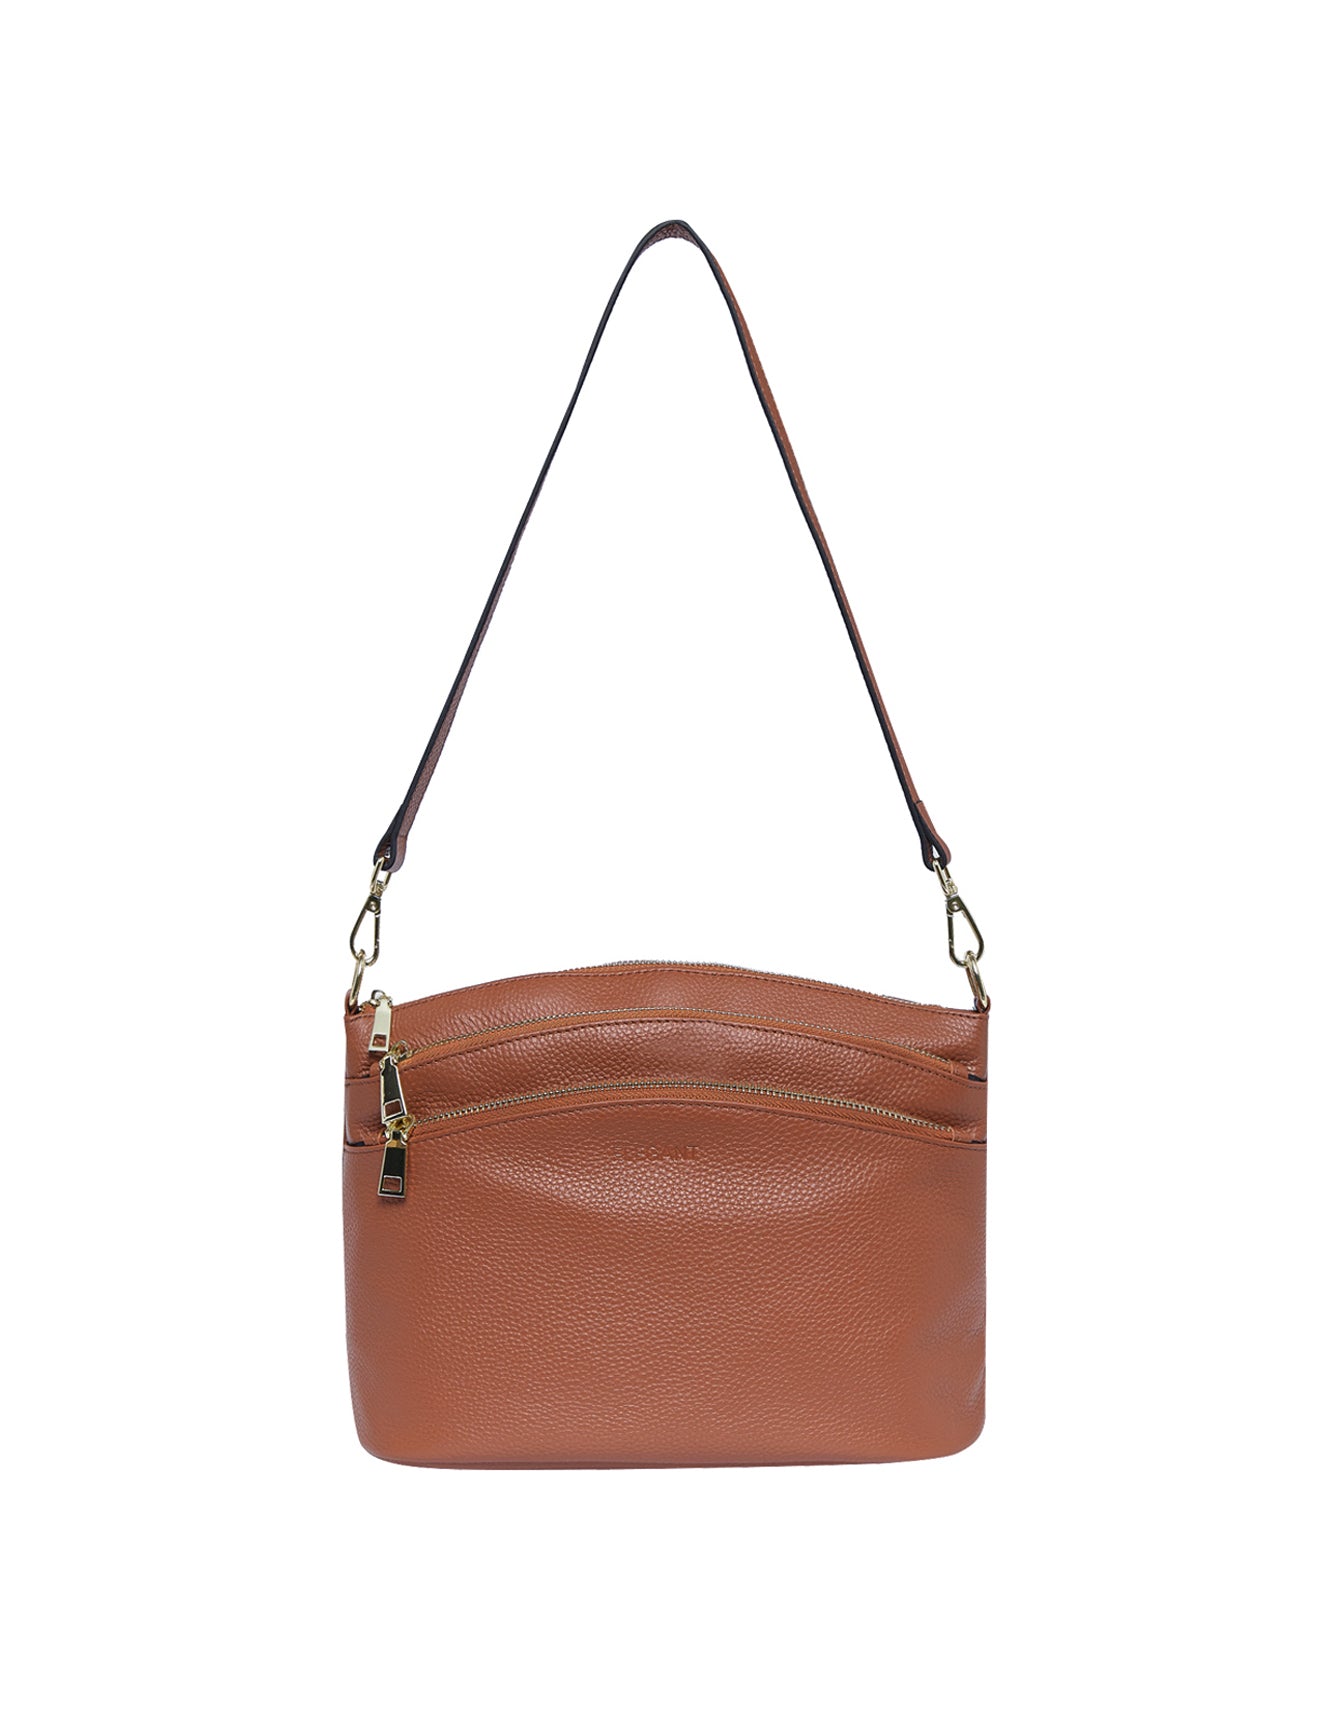 Elegant Tan Leather Handbag